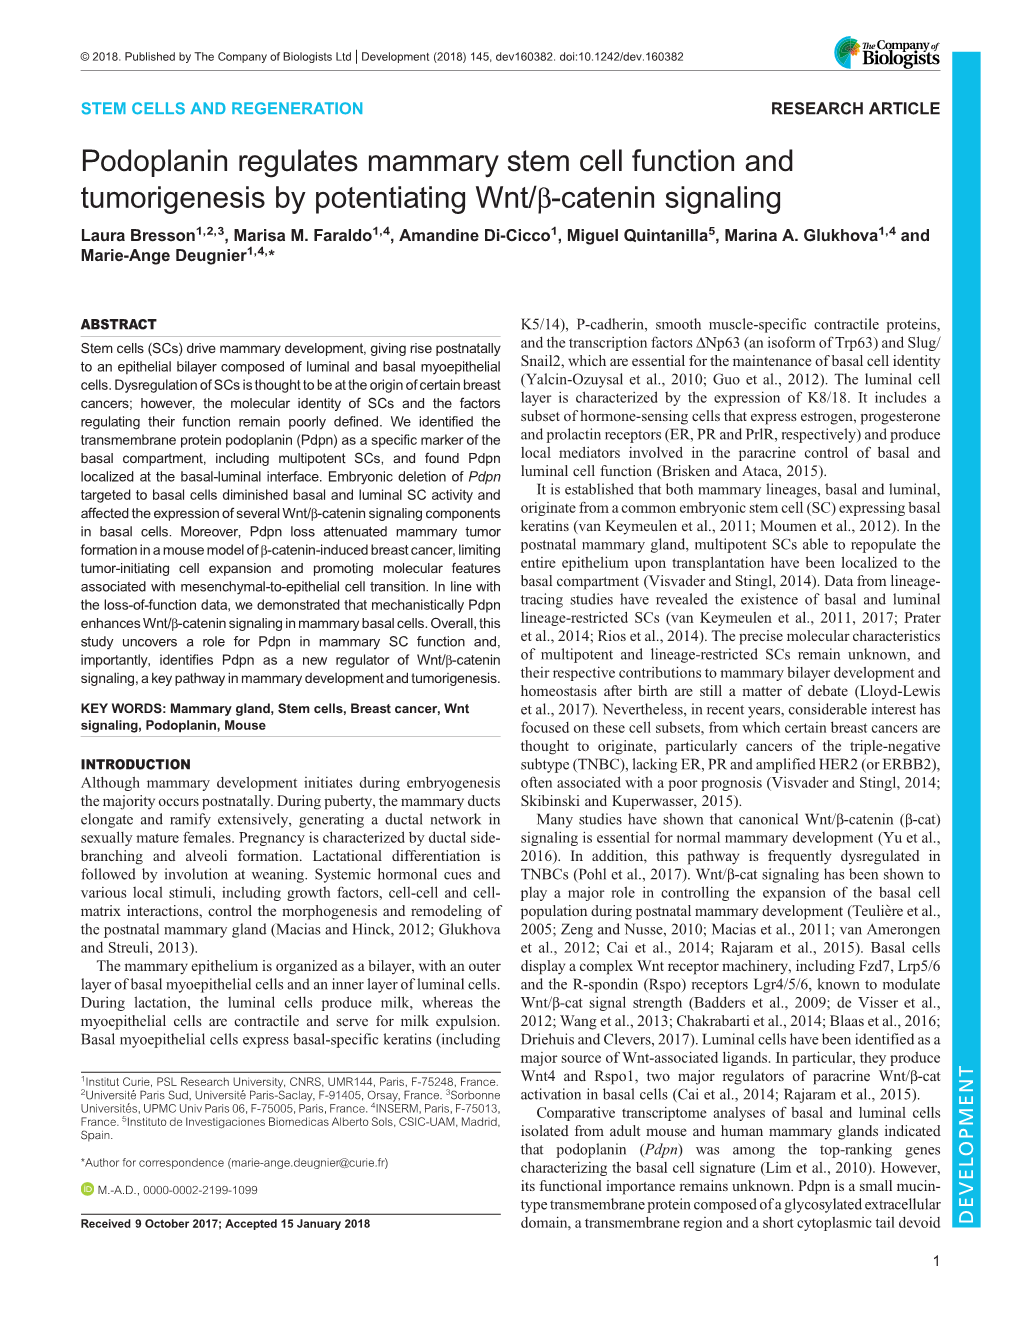 Podoplanin Regulates Mammary Stem Cell Function and Tumorigenesis by Potentiating Wnt/Β-Catenin Signaling Laura Bresson1,2,3, Marisa M